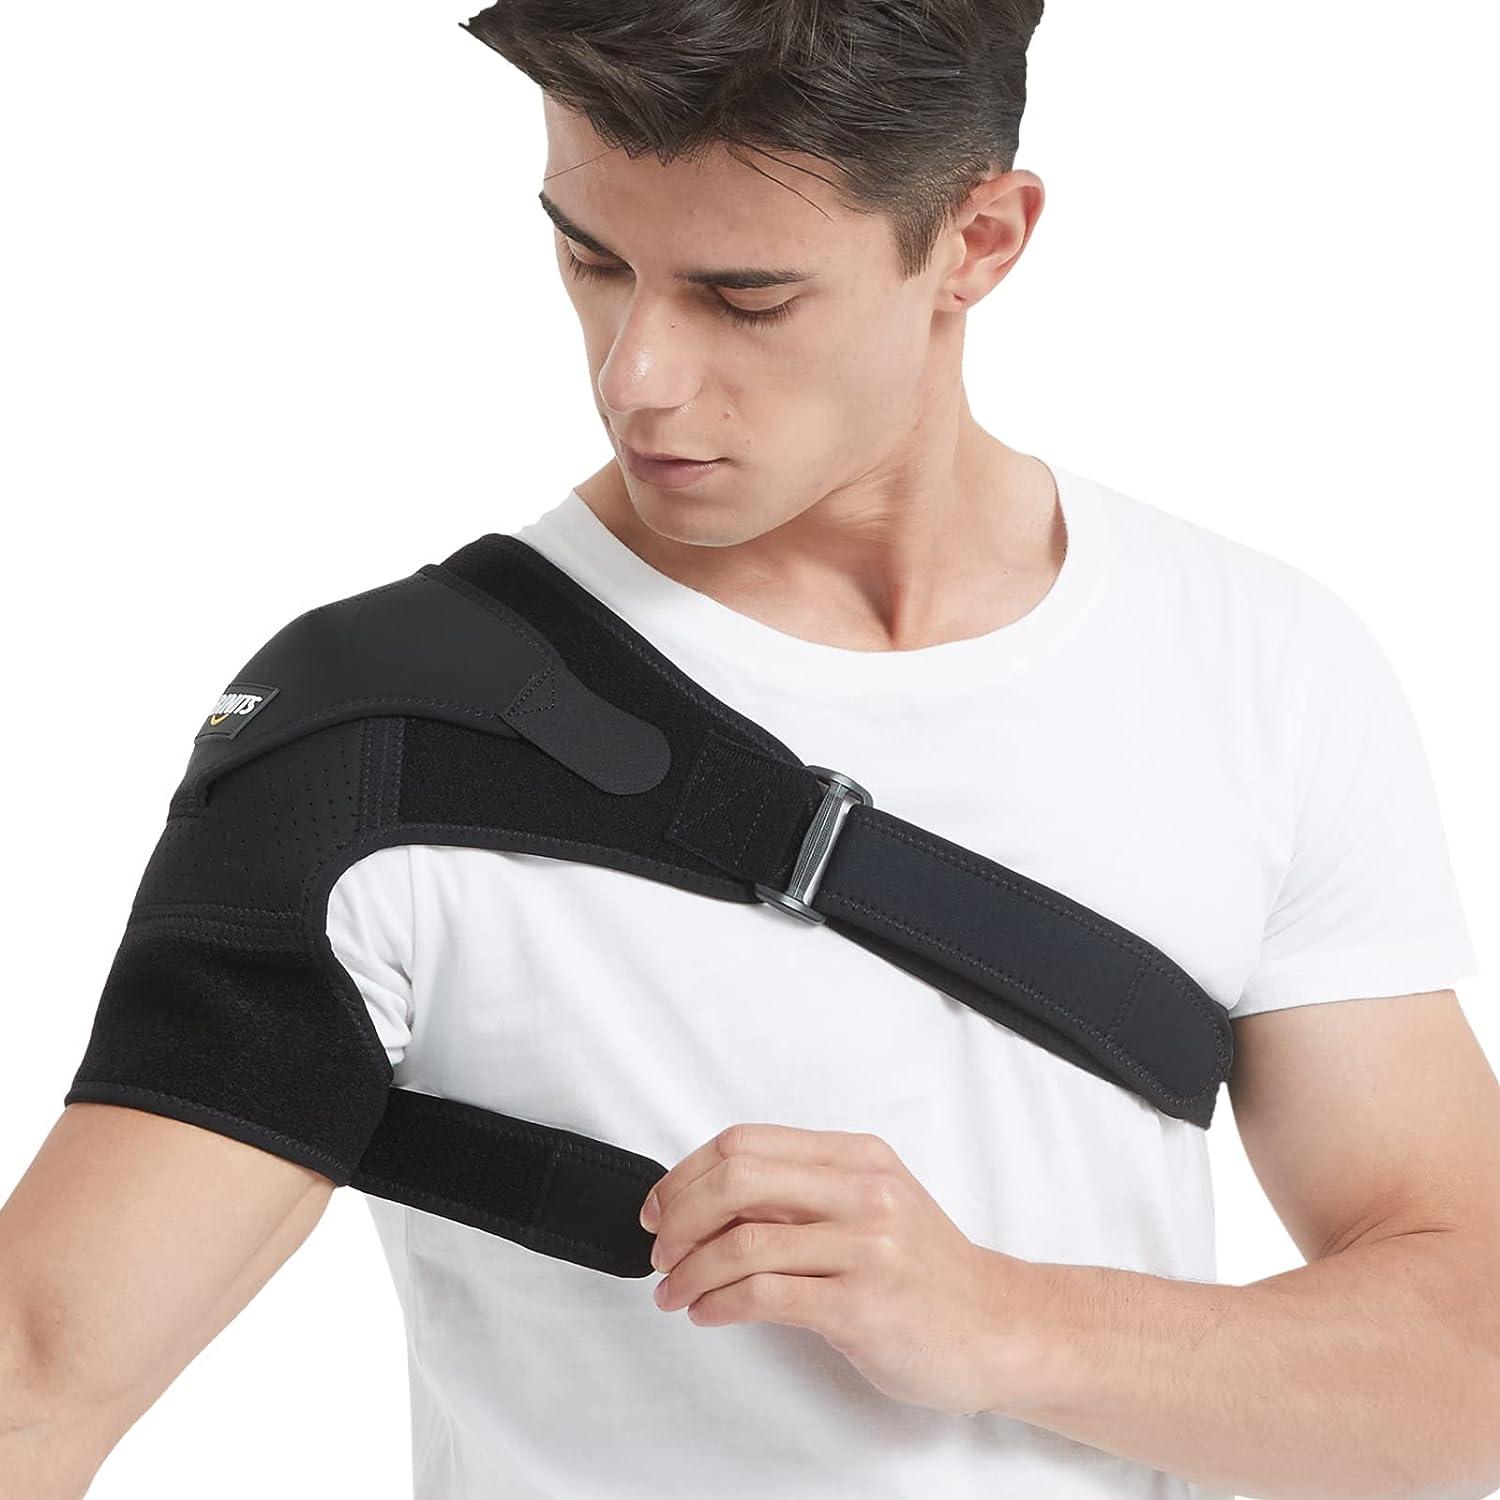 Shoulder Brace Elastic Support Rotator Cuff Pain Relief Adjustable